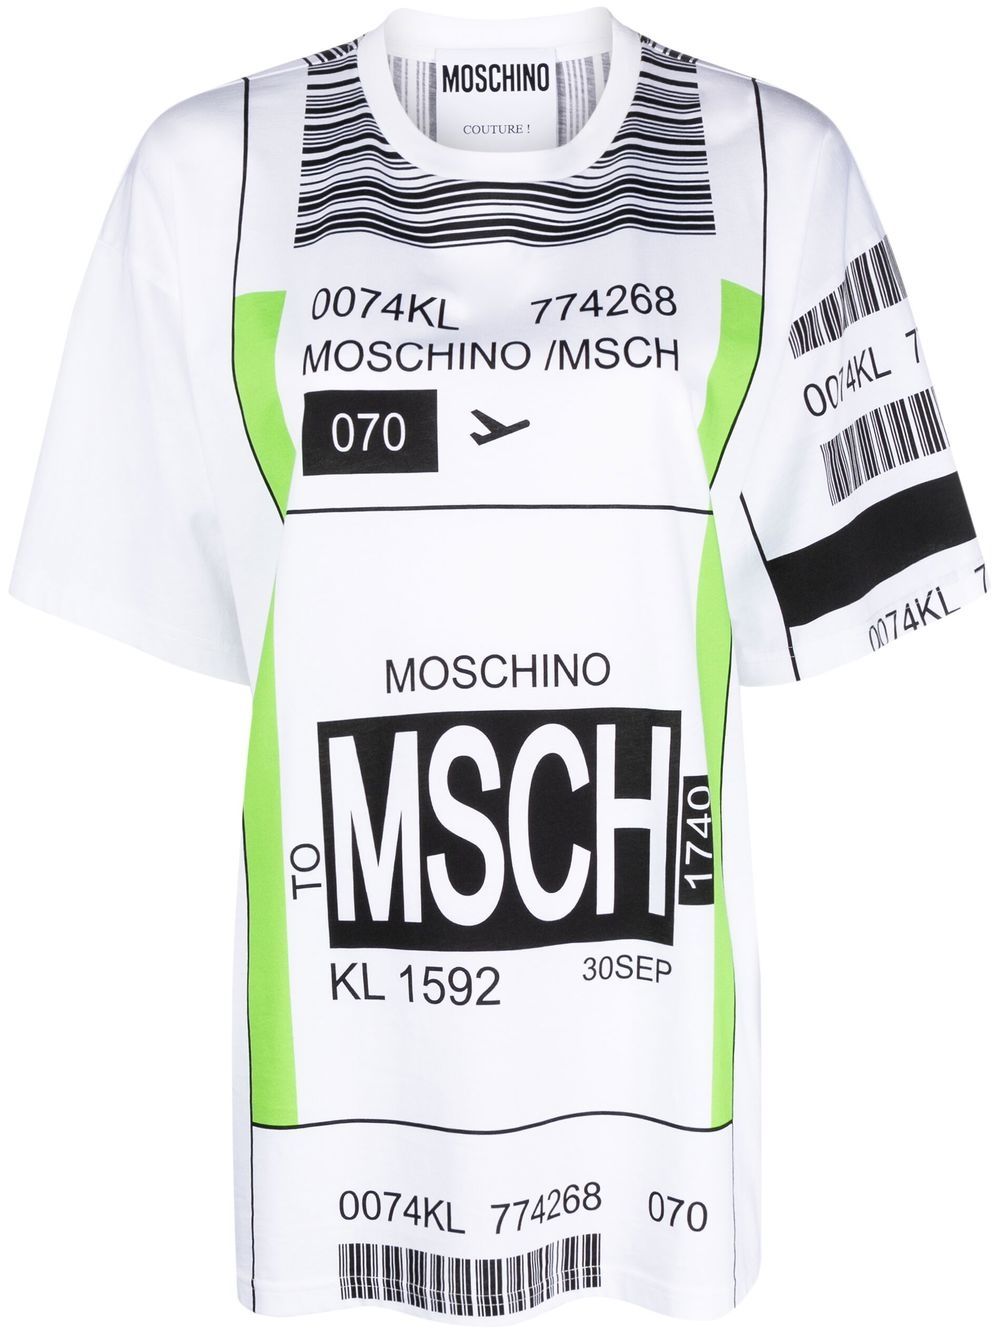 Moschino Cheap & Chic Im Playing Print T Shirt, $170, farfetch.com